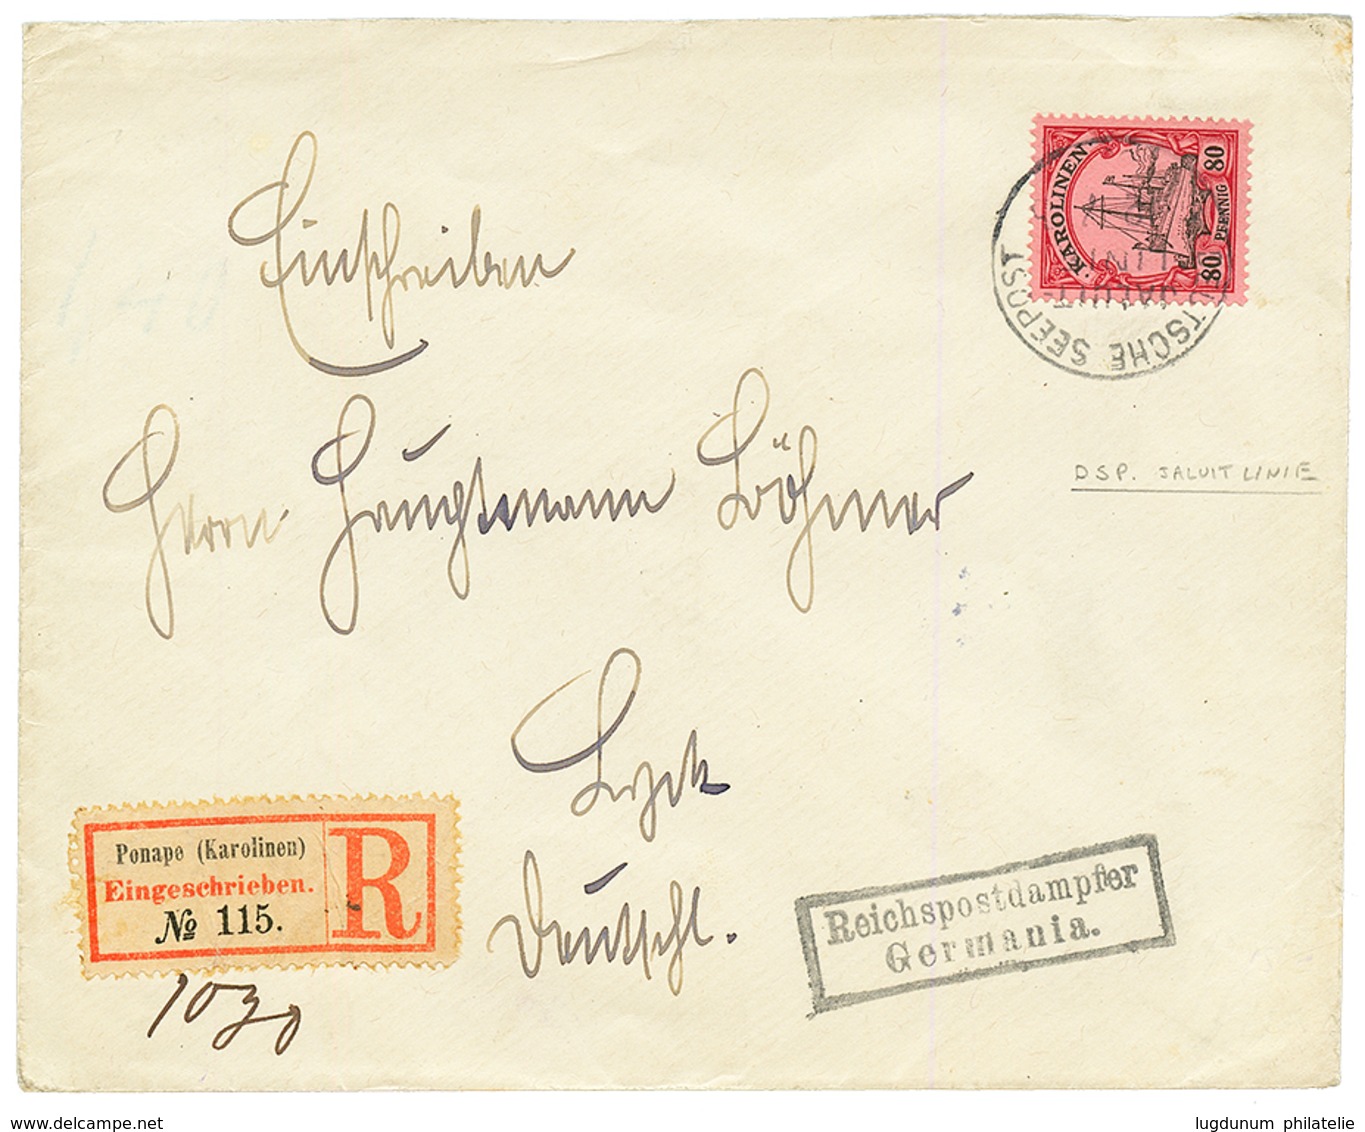 CAROLINES - MARITIME : 1905 80pf Canc. DEUTSCHE SEEPOST JALUIT LINIE + REGISTERED Label PONAPE To GERMANY. Vf. - Karolinen